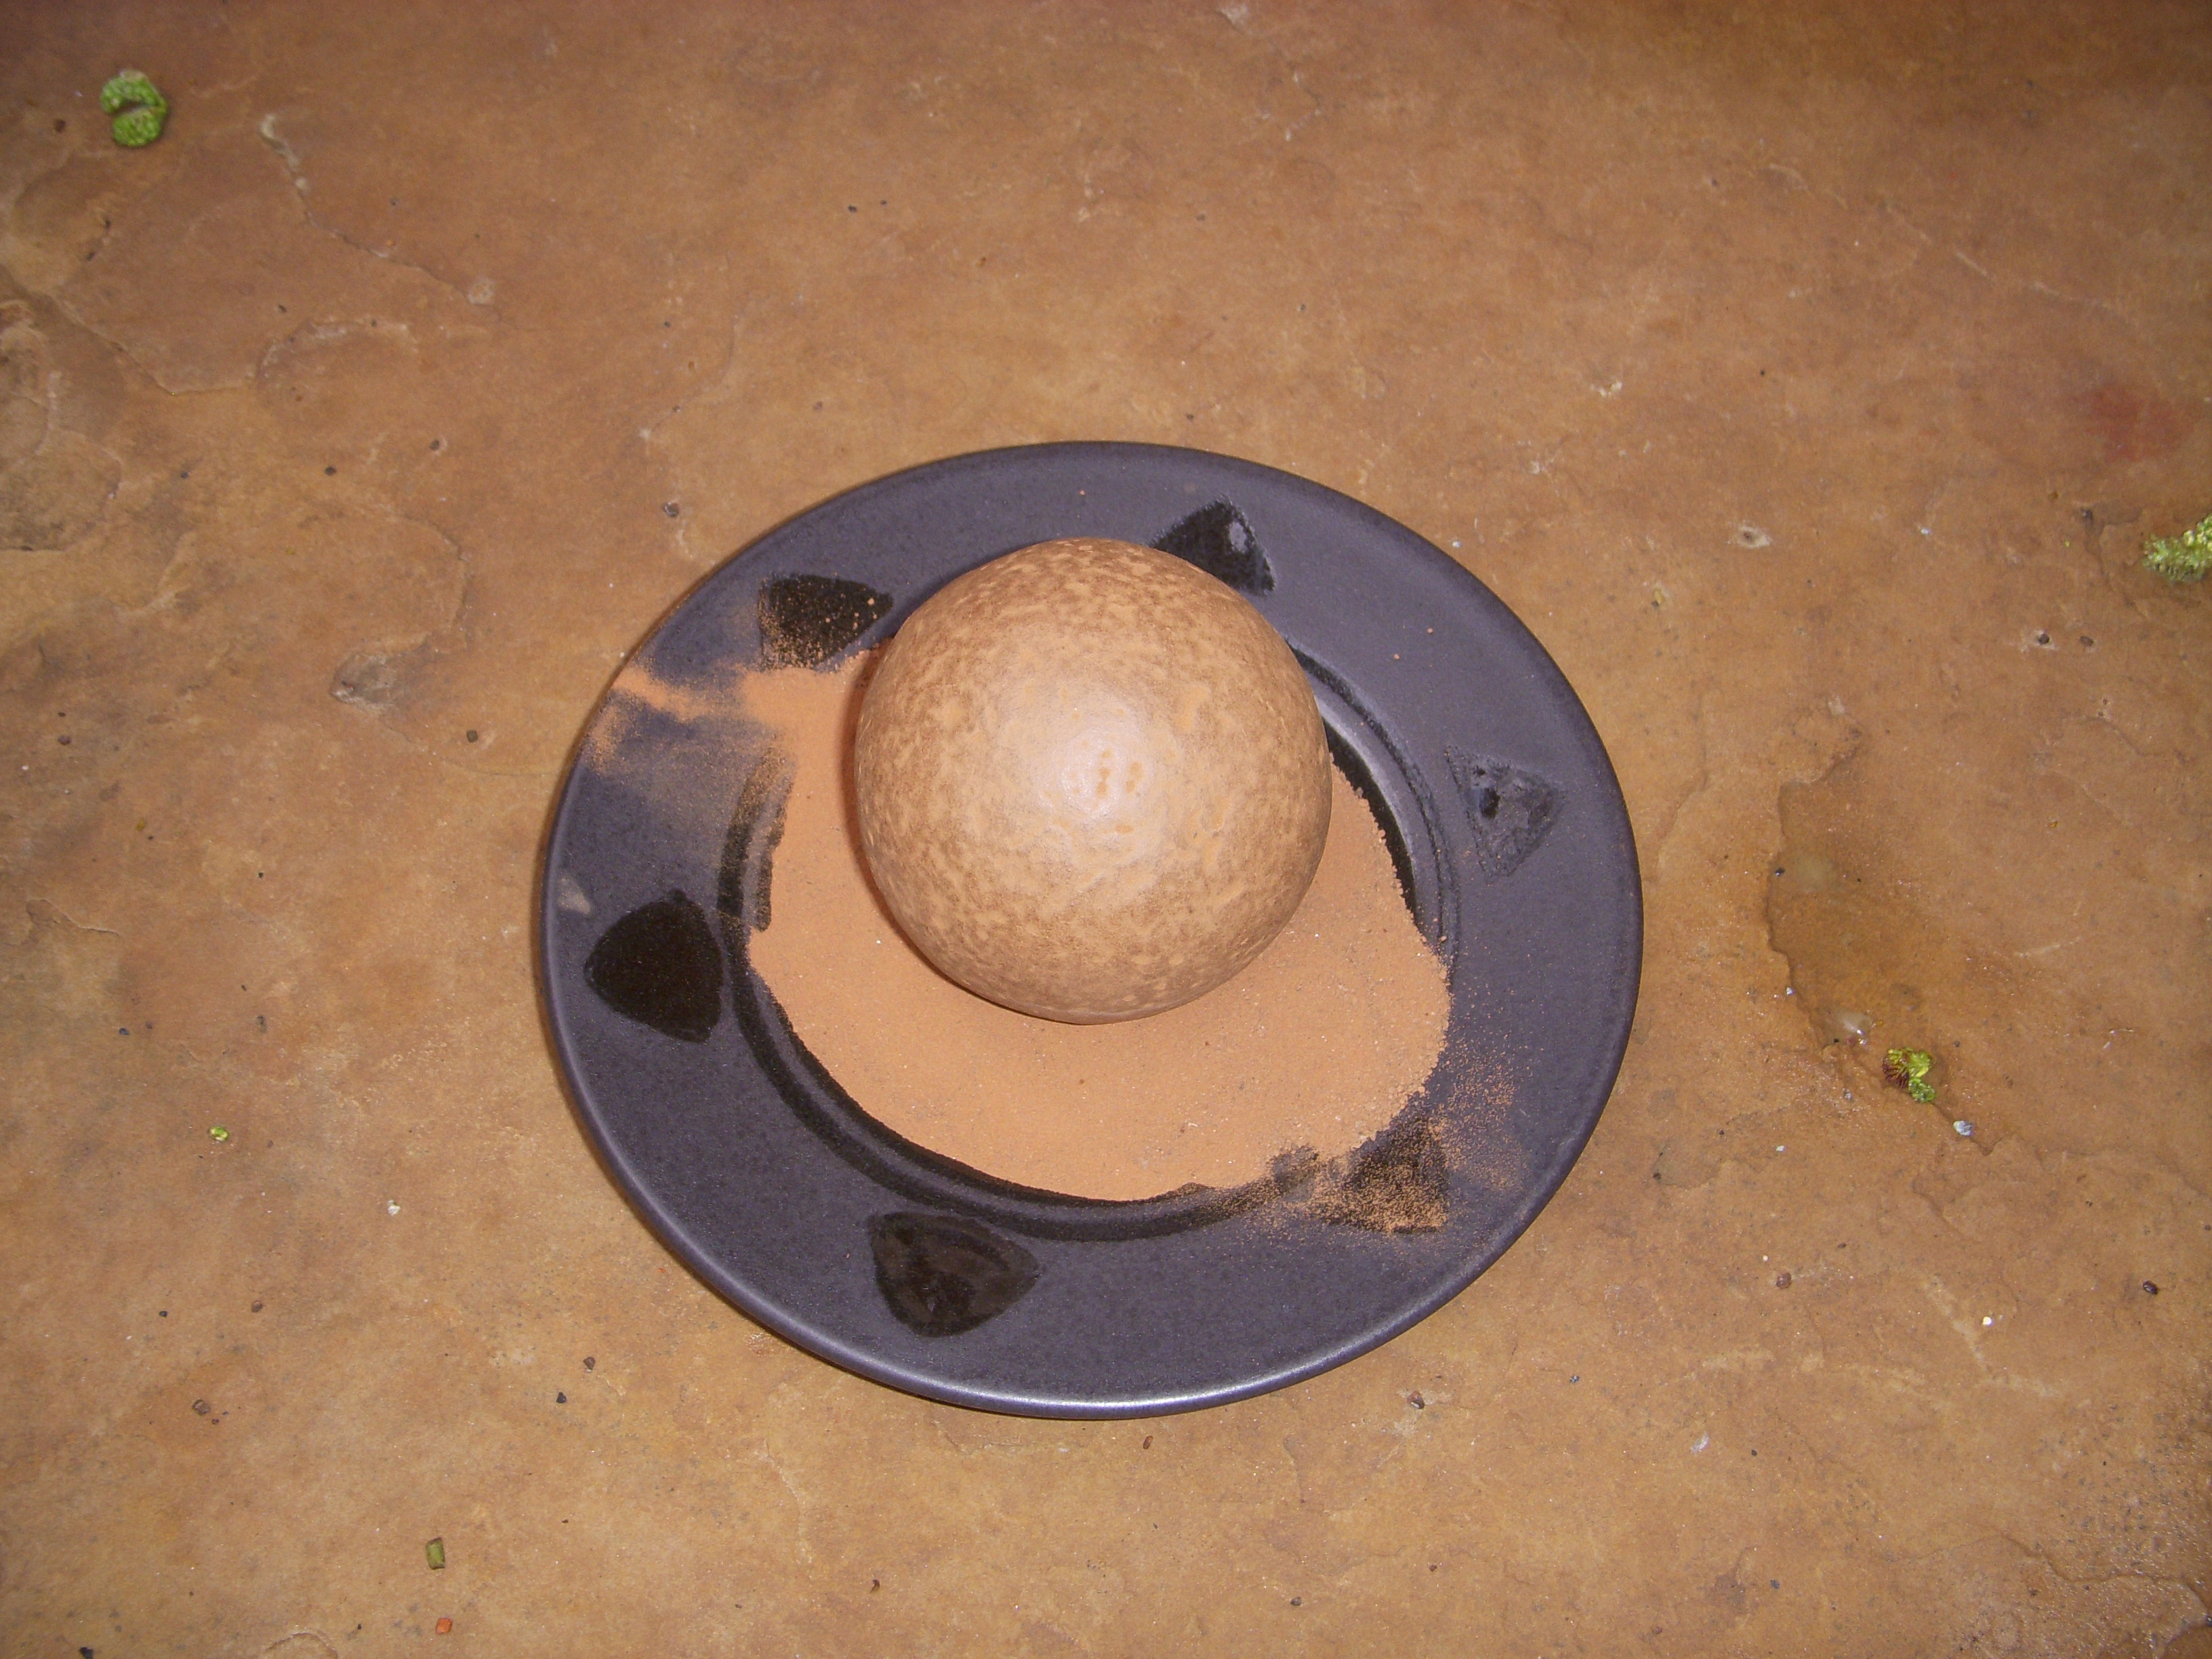 My first dorodango, from a deposit of soil in Sedona, AZ